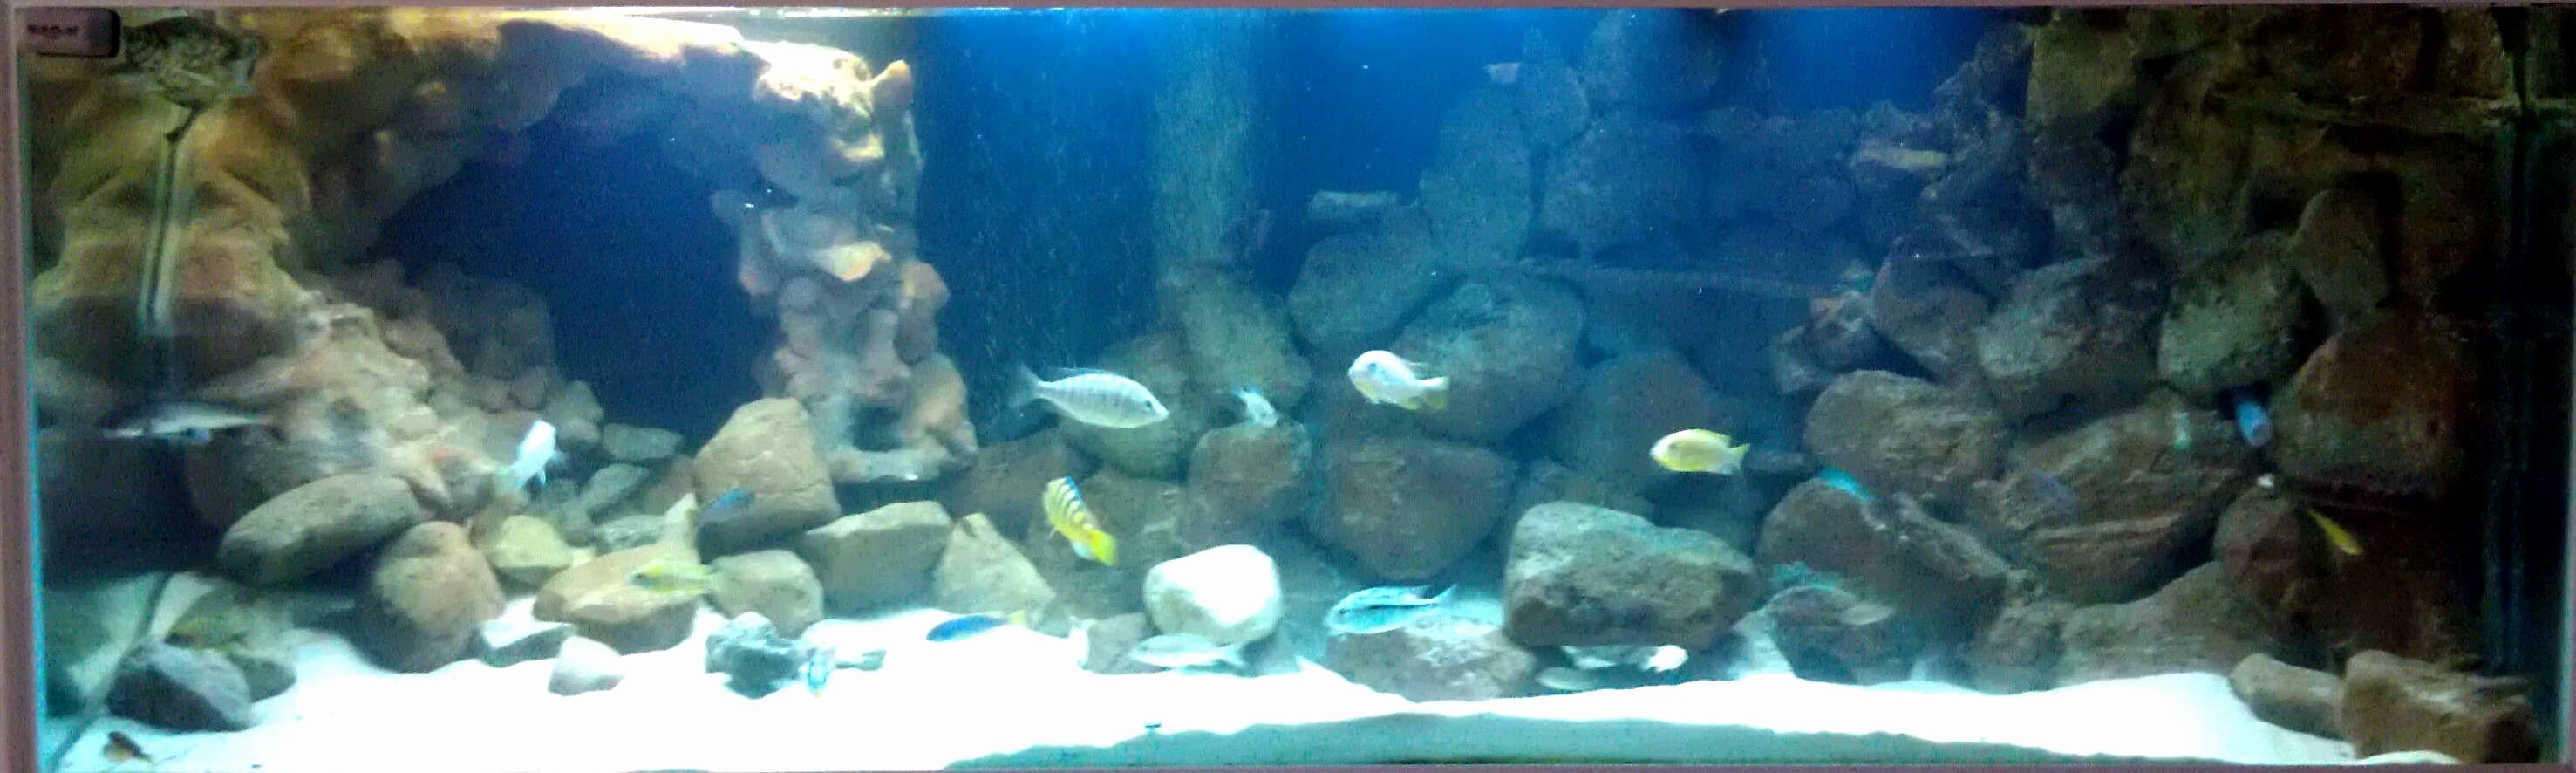 3d Backgrounds Fish Tank Beautiful Aquarium Backgrounds Wallpaper Cave